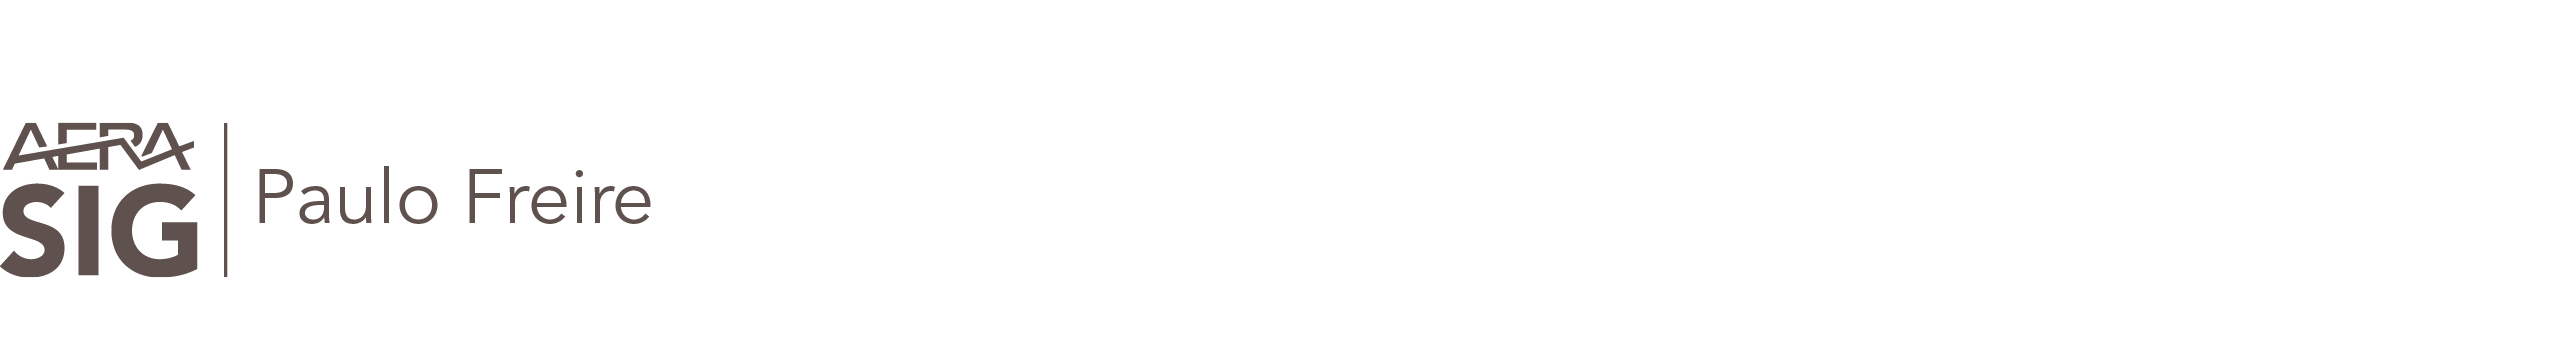 SIG-159_logotype